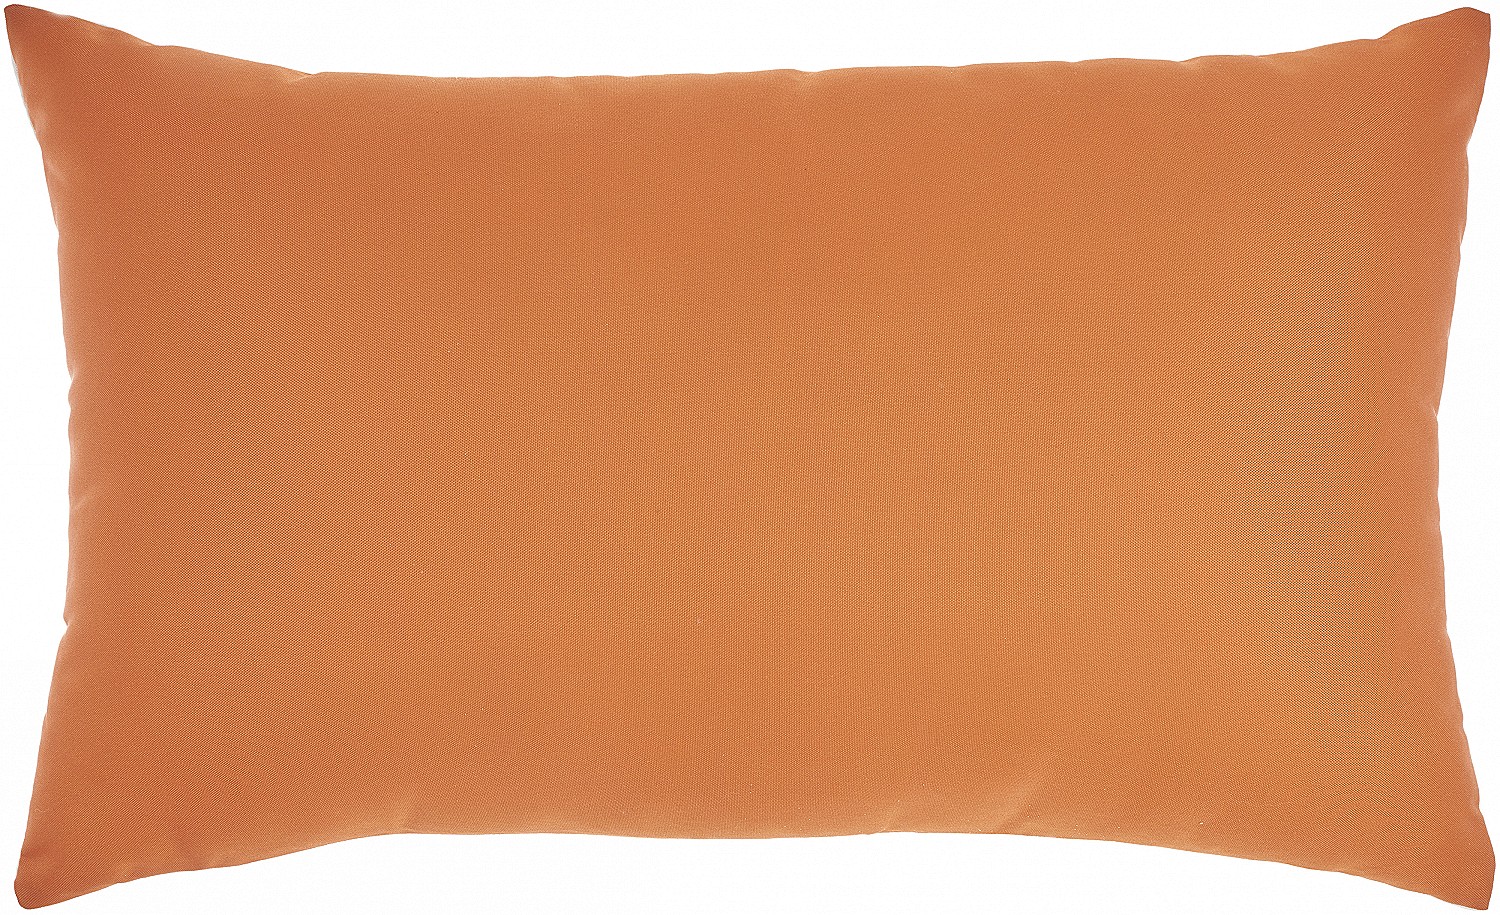 Mina Victory Outdoor Pillows Raised Print Leopard 14" x 23" Orange Throw Pillow - image 3 of 6